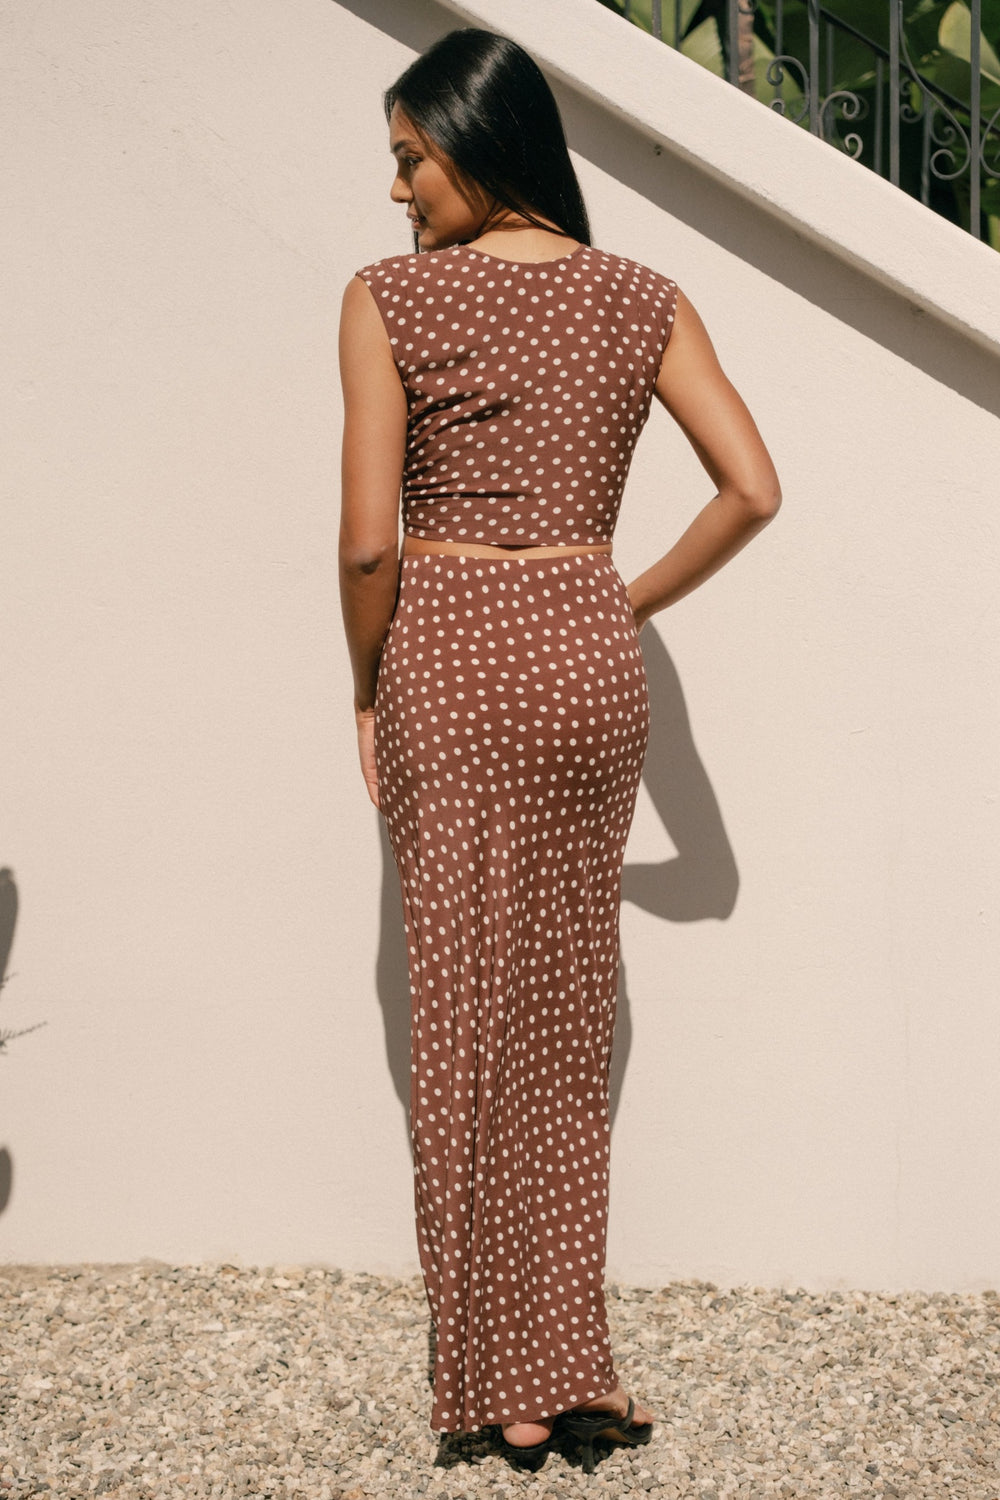 Marni Skirt in Brown Polka Dots - Whimsy & Row